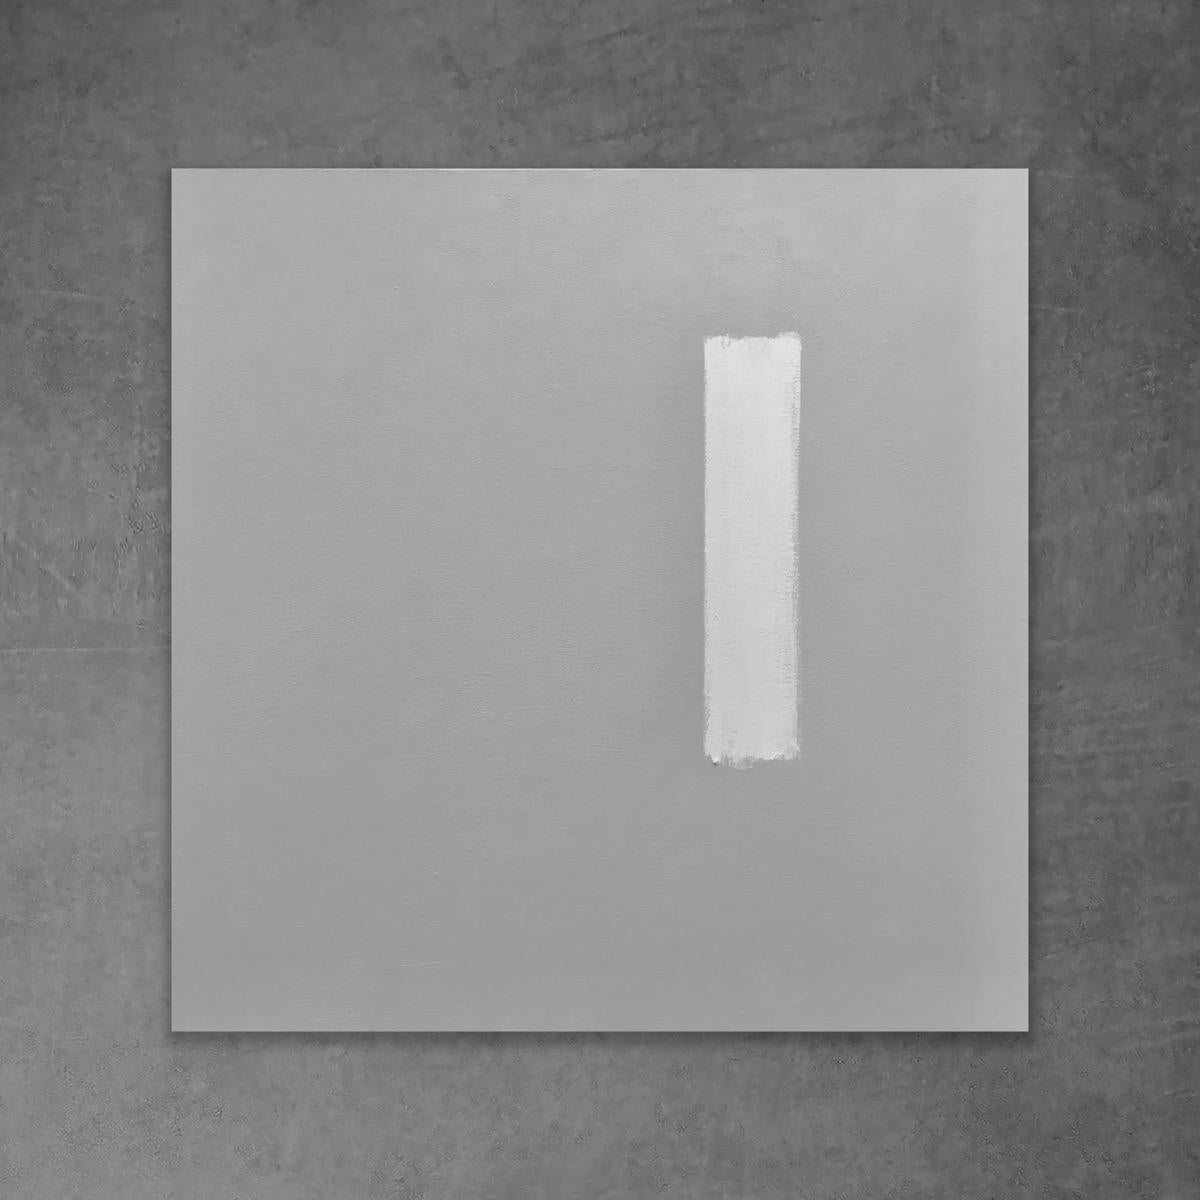 Line de finition - 20 "x20 ", gris, blanc, moderne, peinture abstraite minimaliste - Art de Andrea Stajan-Ferkul